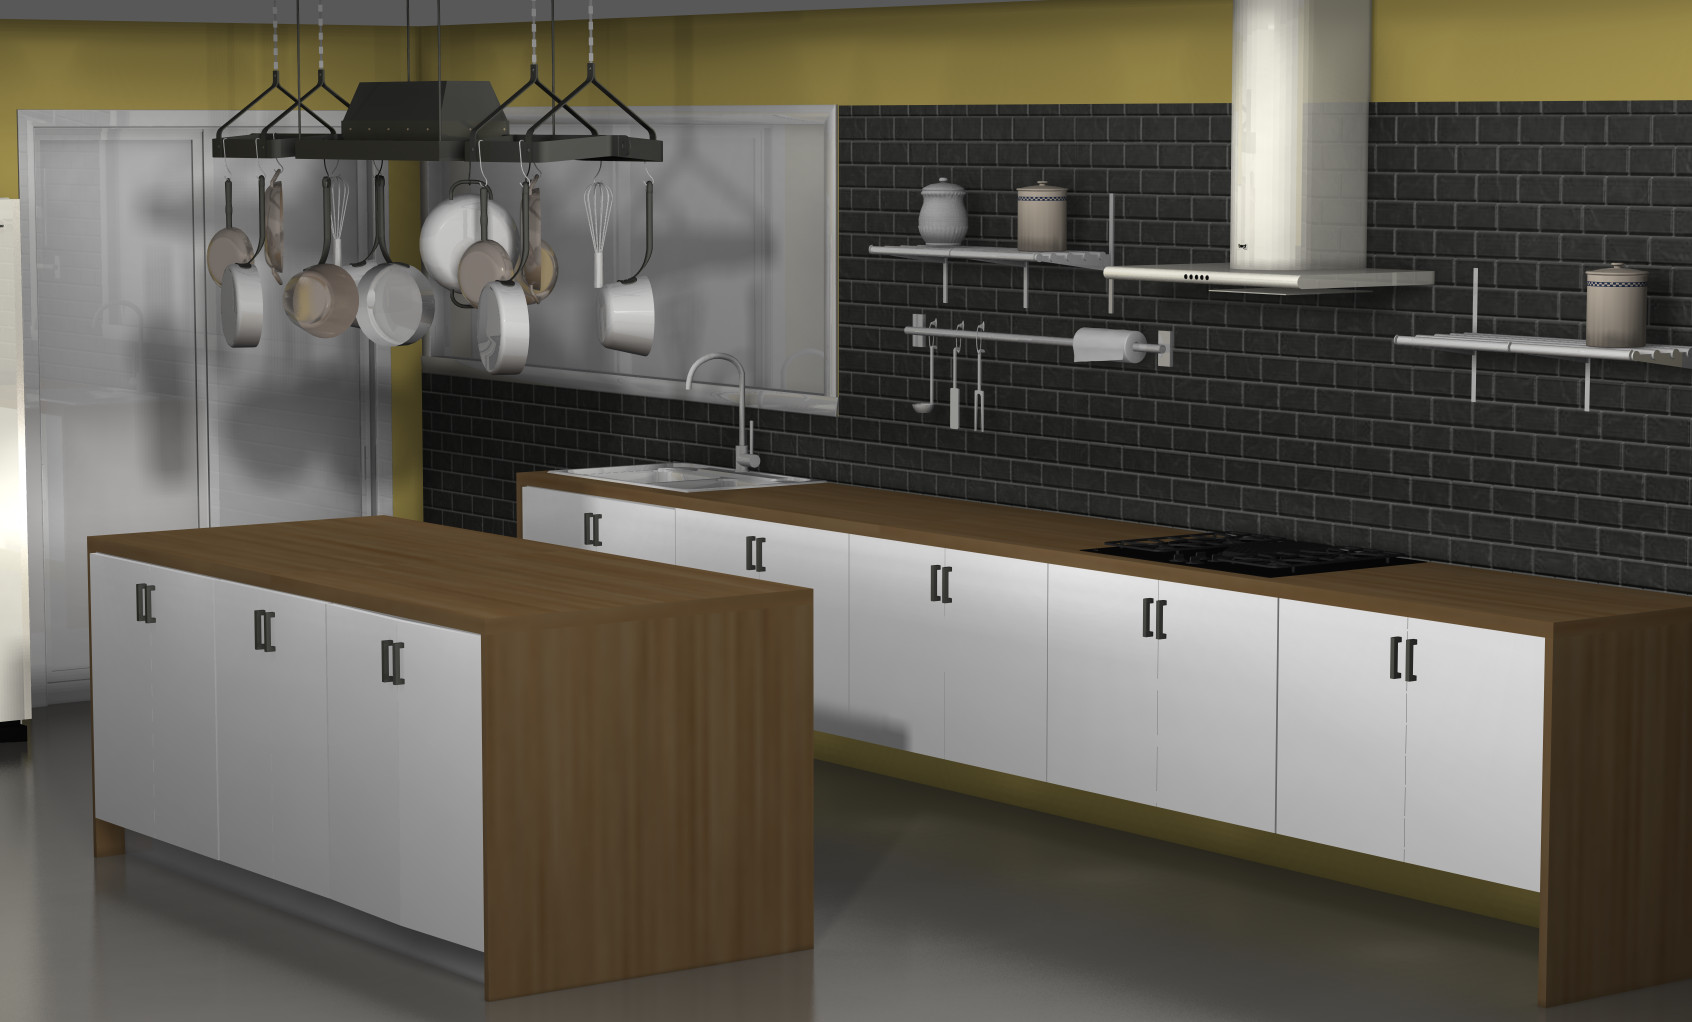 Ikea Kitchen Wall Storage
 Kitchen design ideas an IKEA kitchen with fewer wall cabinets